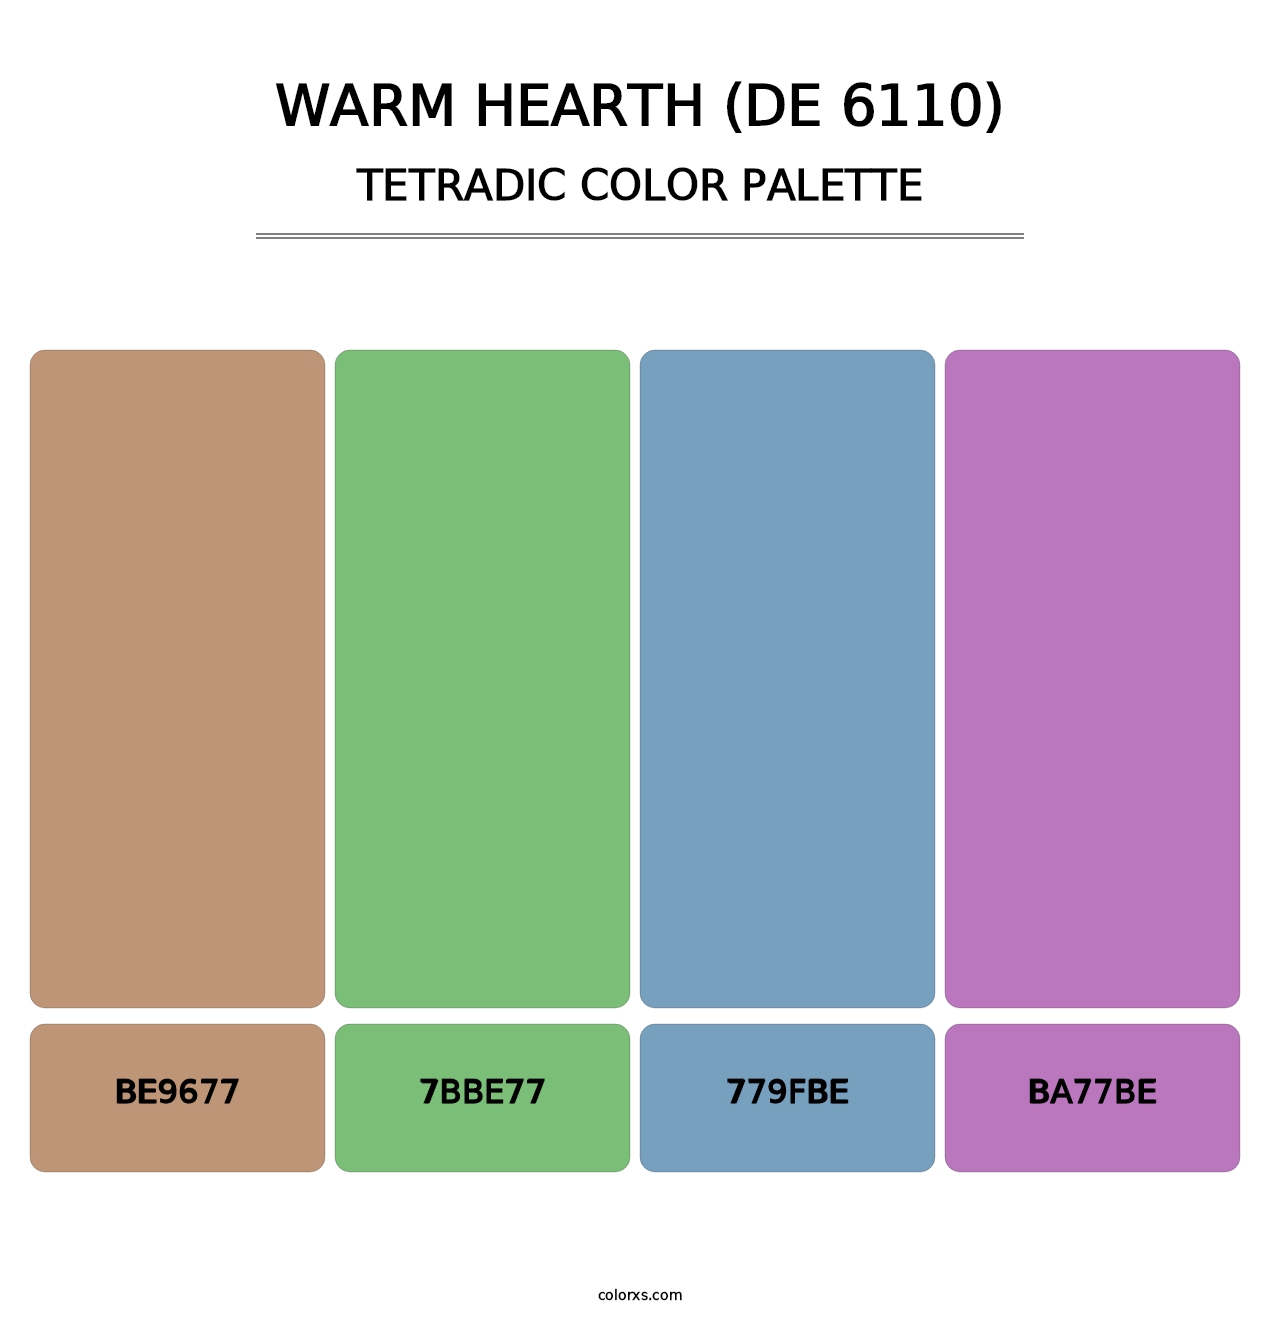 Warm Hearth (DE 6110) - Tetradic Color Palette